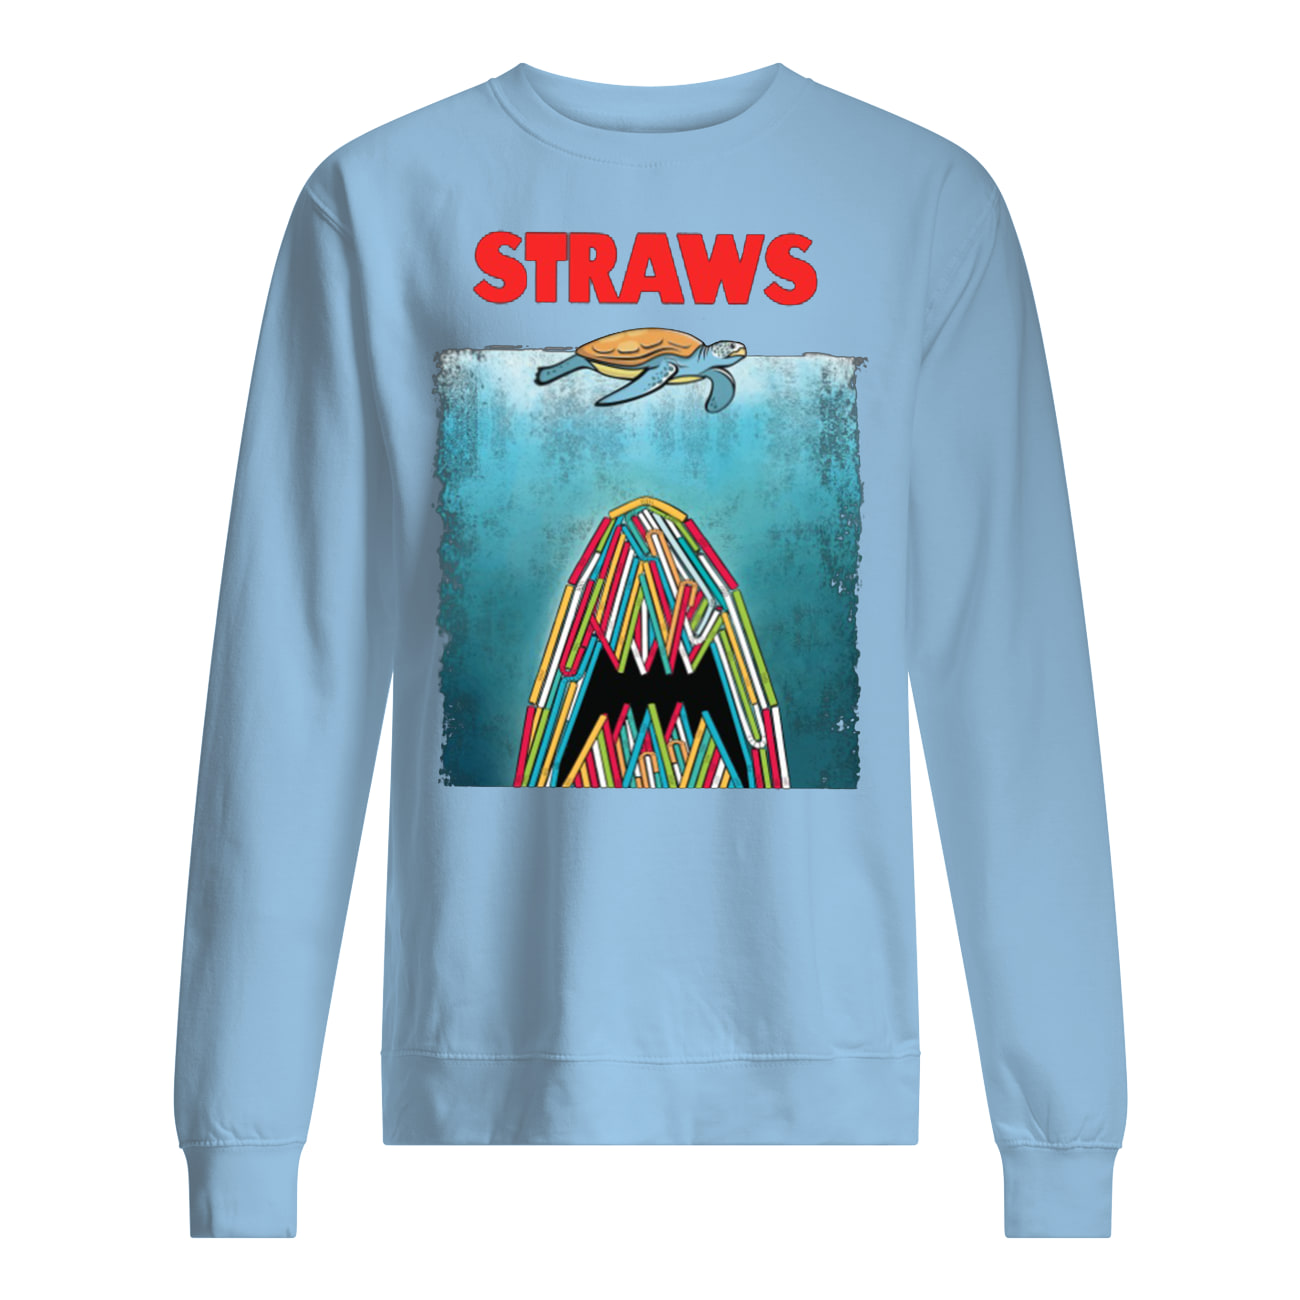 Shark plastic straws save the turtle sweatshirt